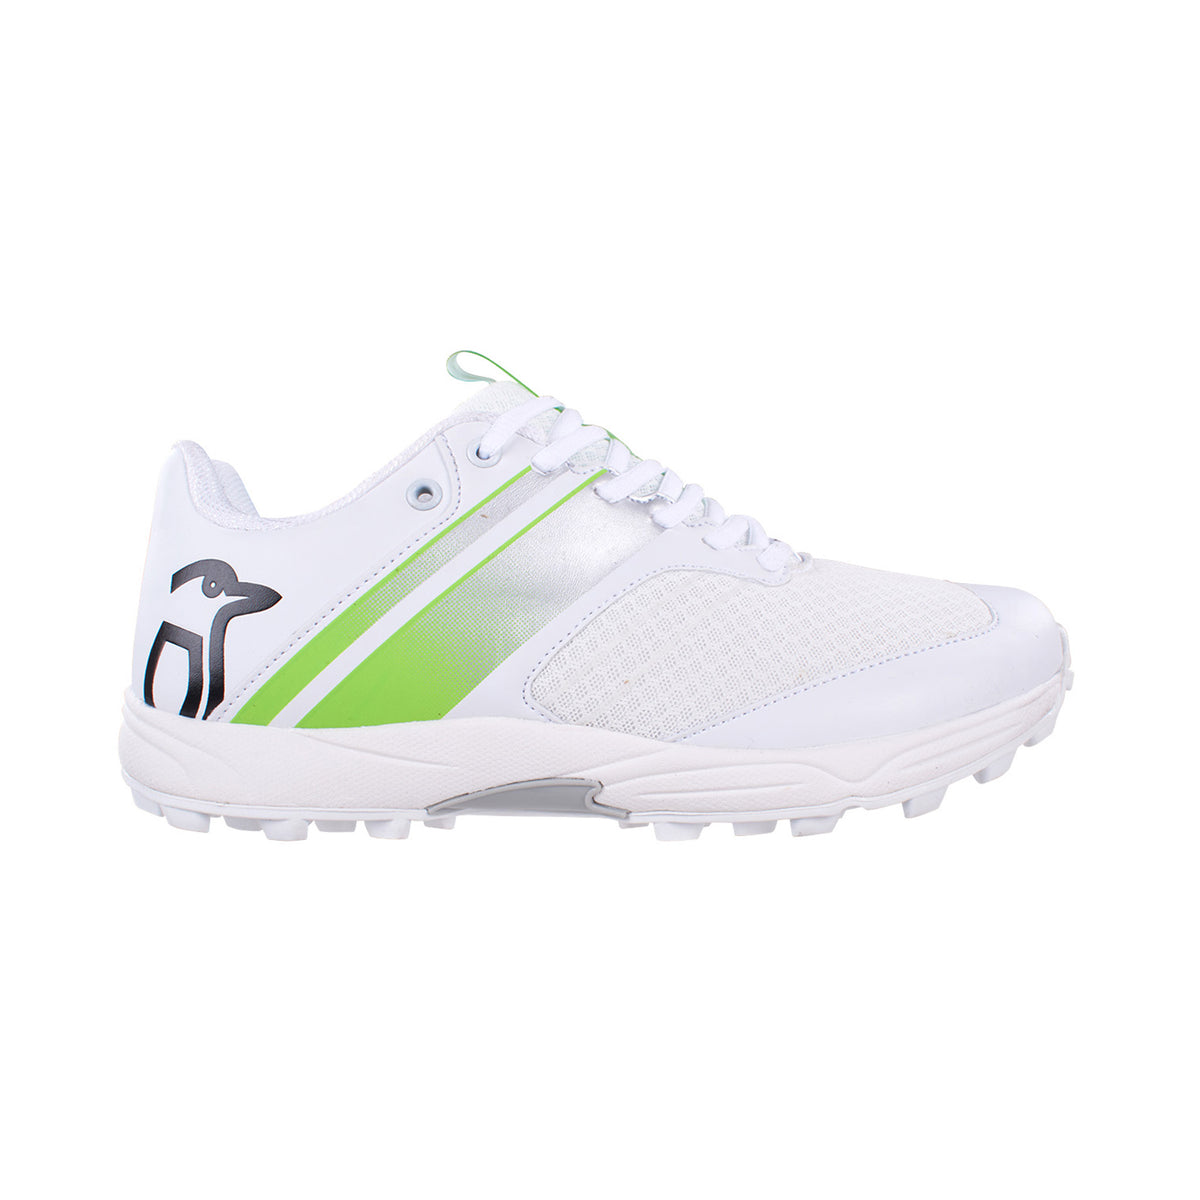 Kookaburra KC 3.0 Rubber Junior Cricket Shoes: White/Lime